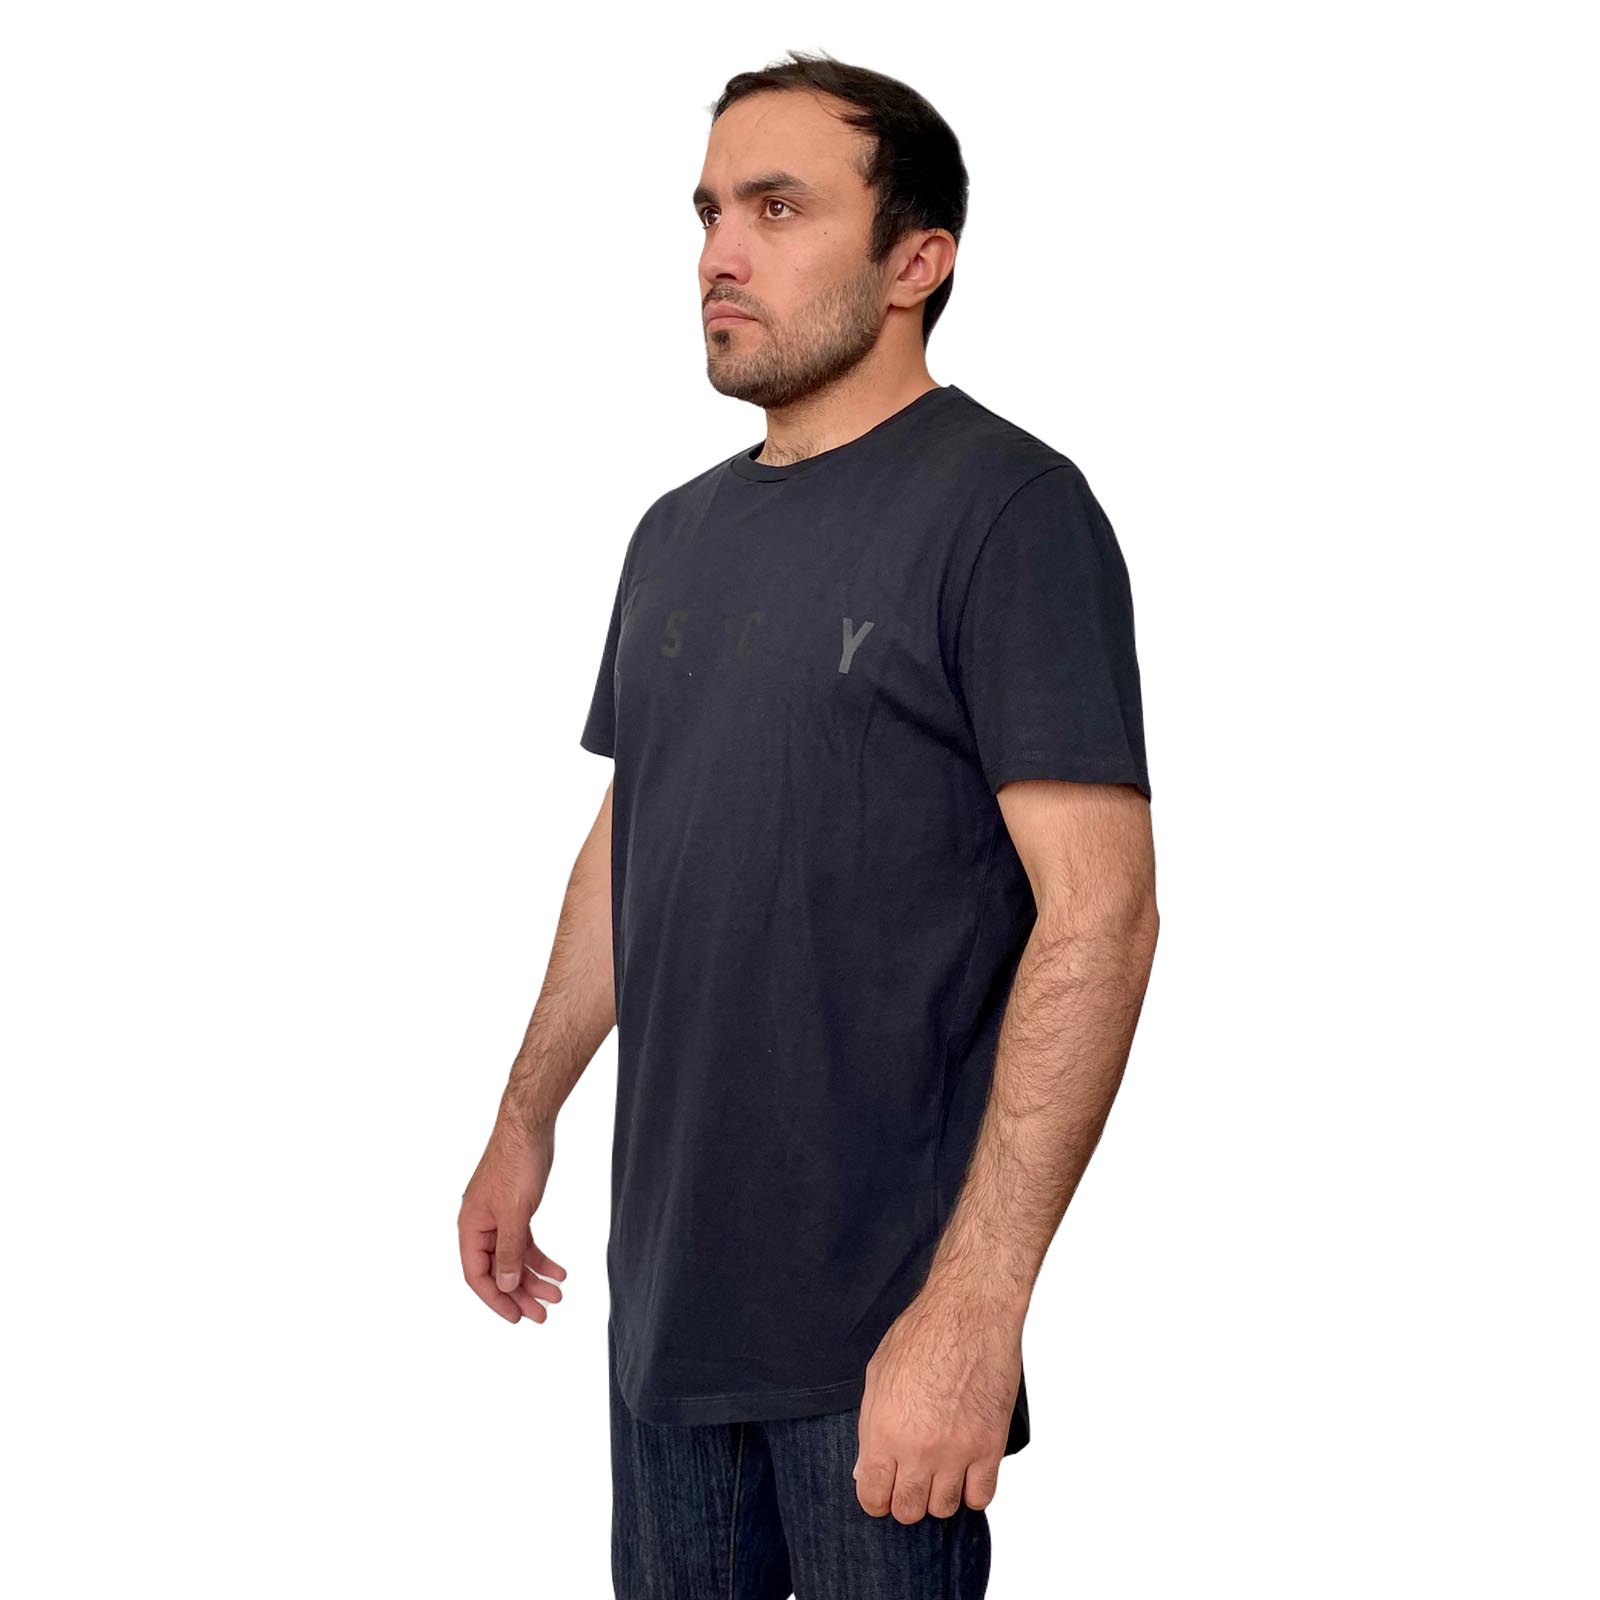 Недорогие футболки для парней и мужчин от бренда KSCY